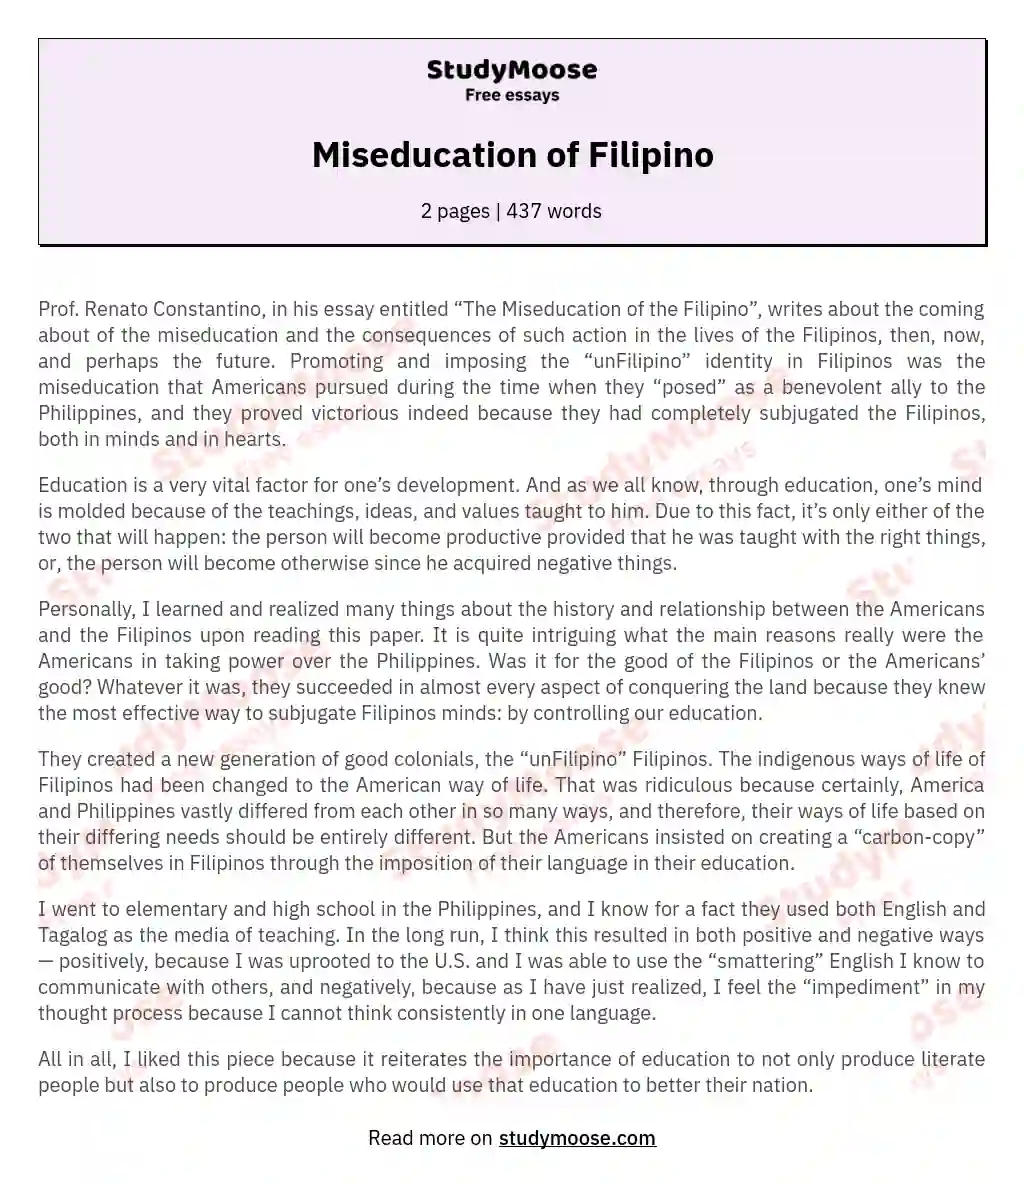 Miseducation of Filipino essay